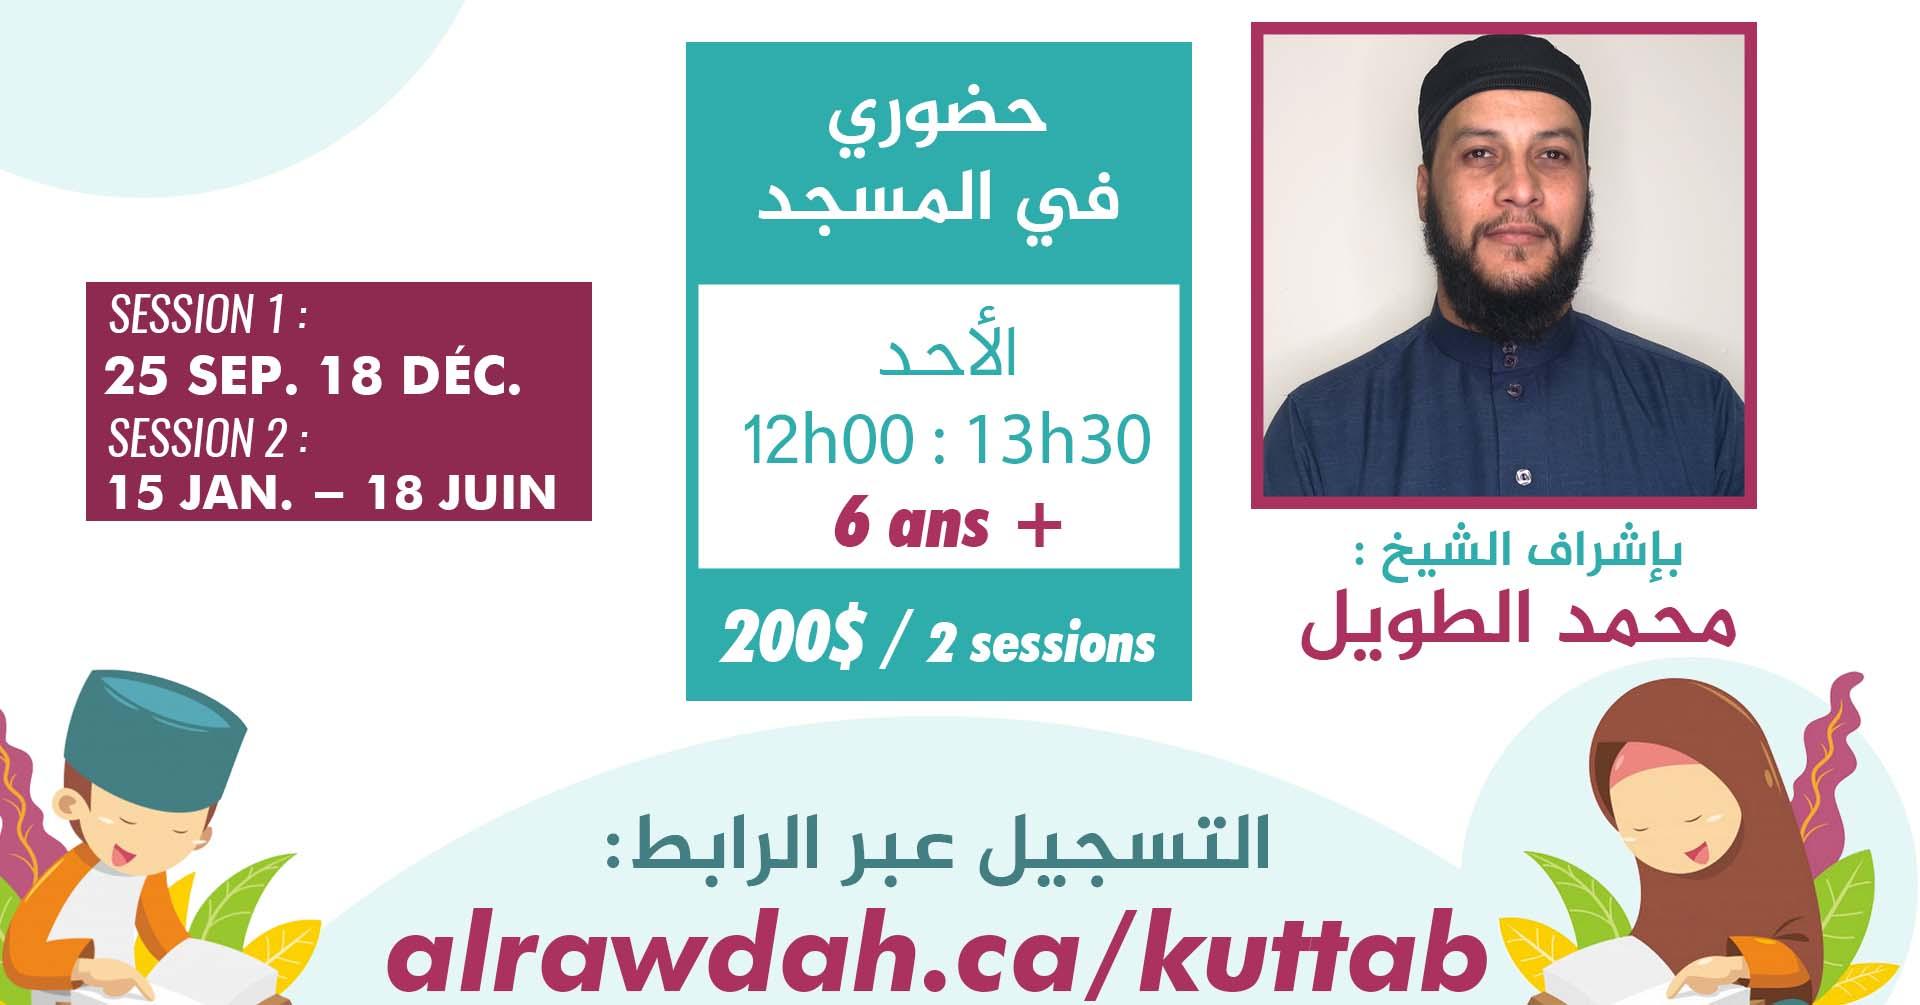 Kuttab AlRawdah - Muhammed Tawil (dimanche)